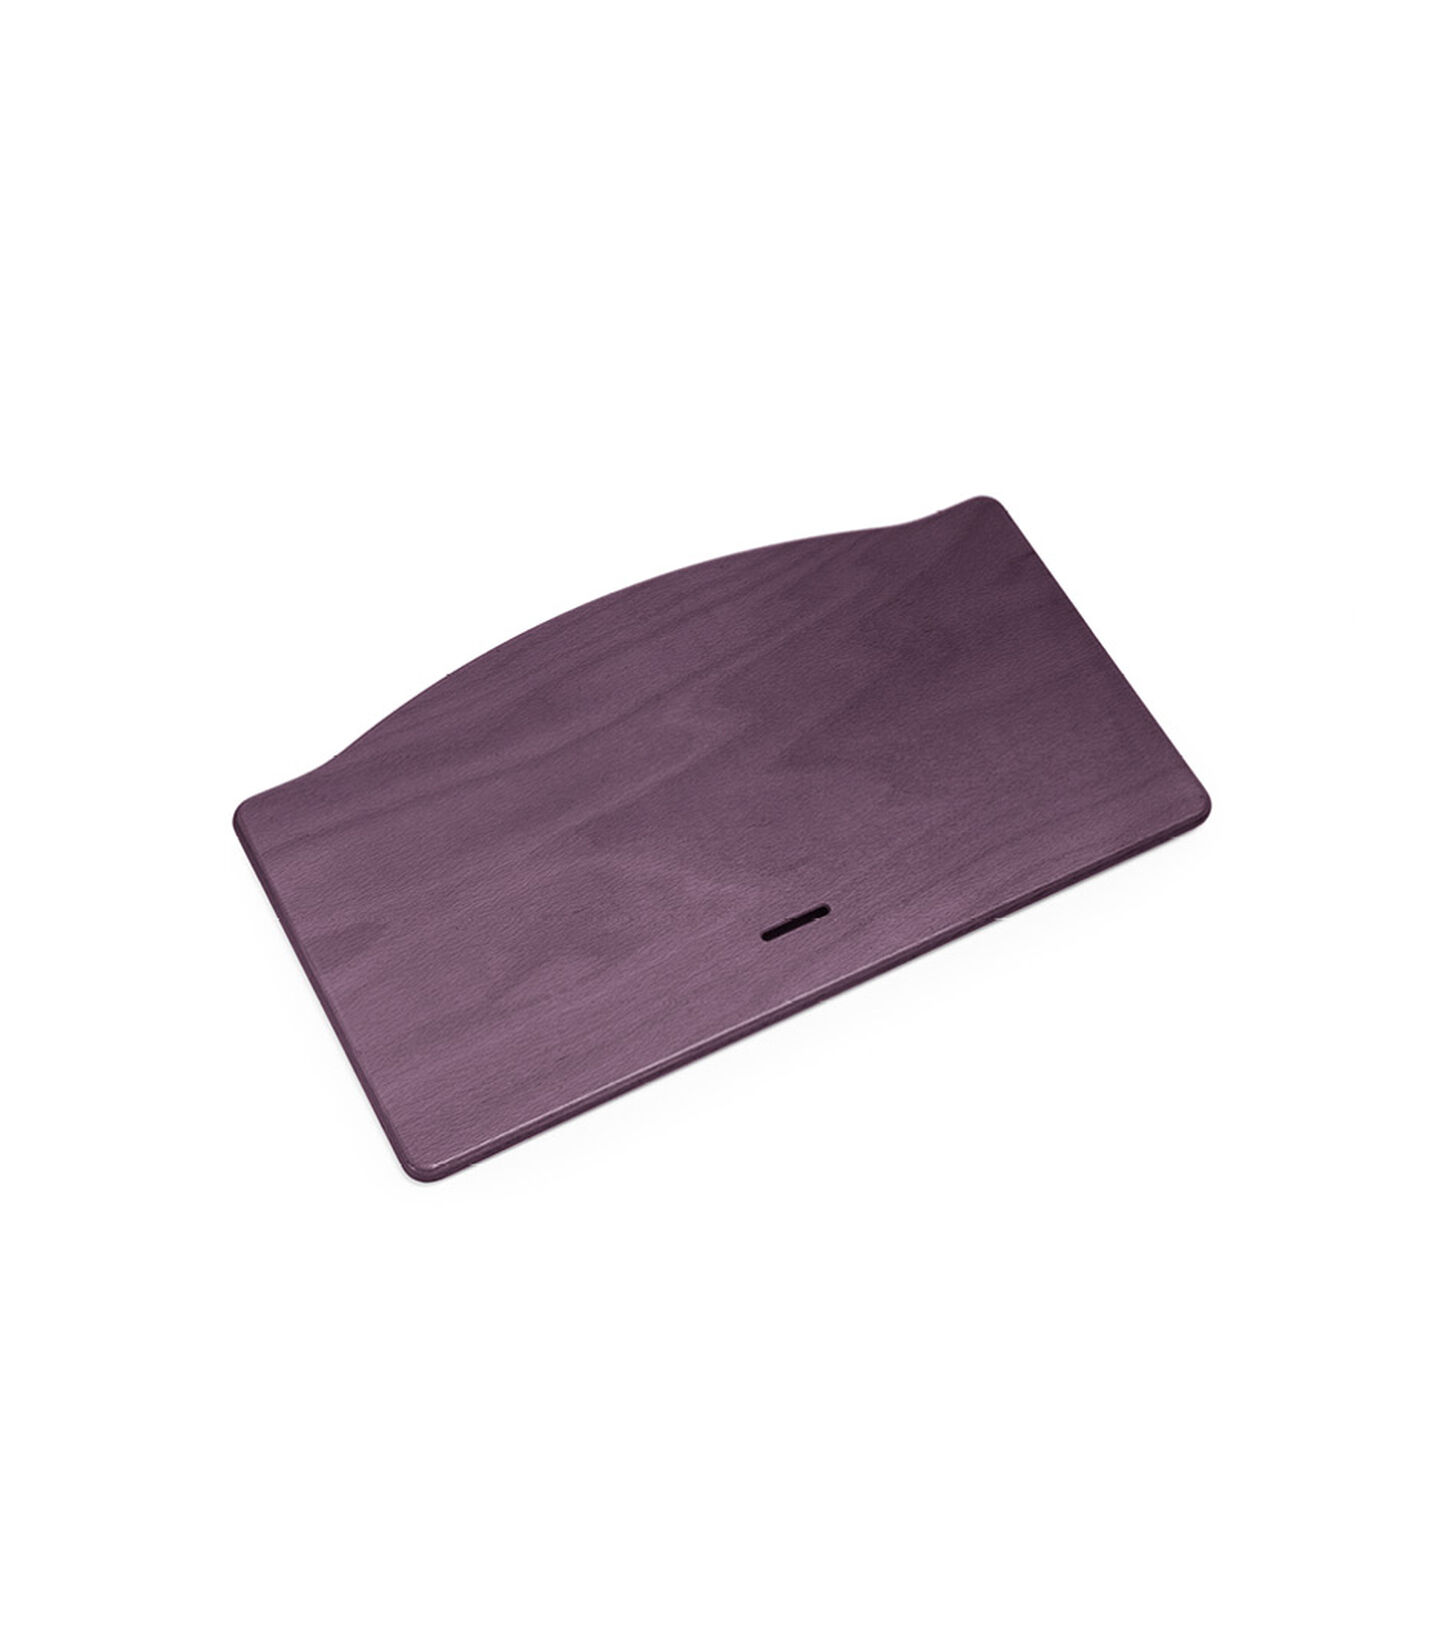 Tripp Trapp® Seatplate Plum Purple, Plum Purple, mainview view 1